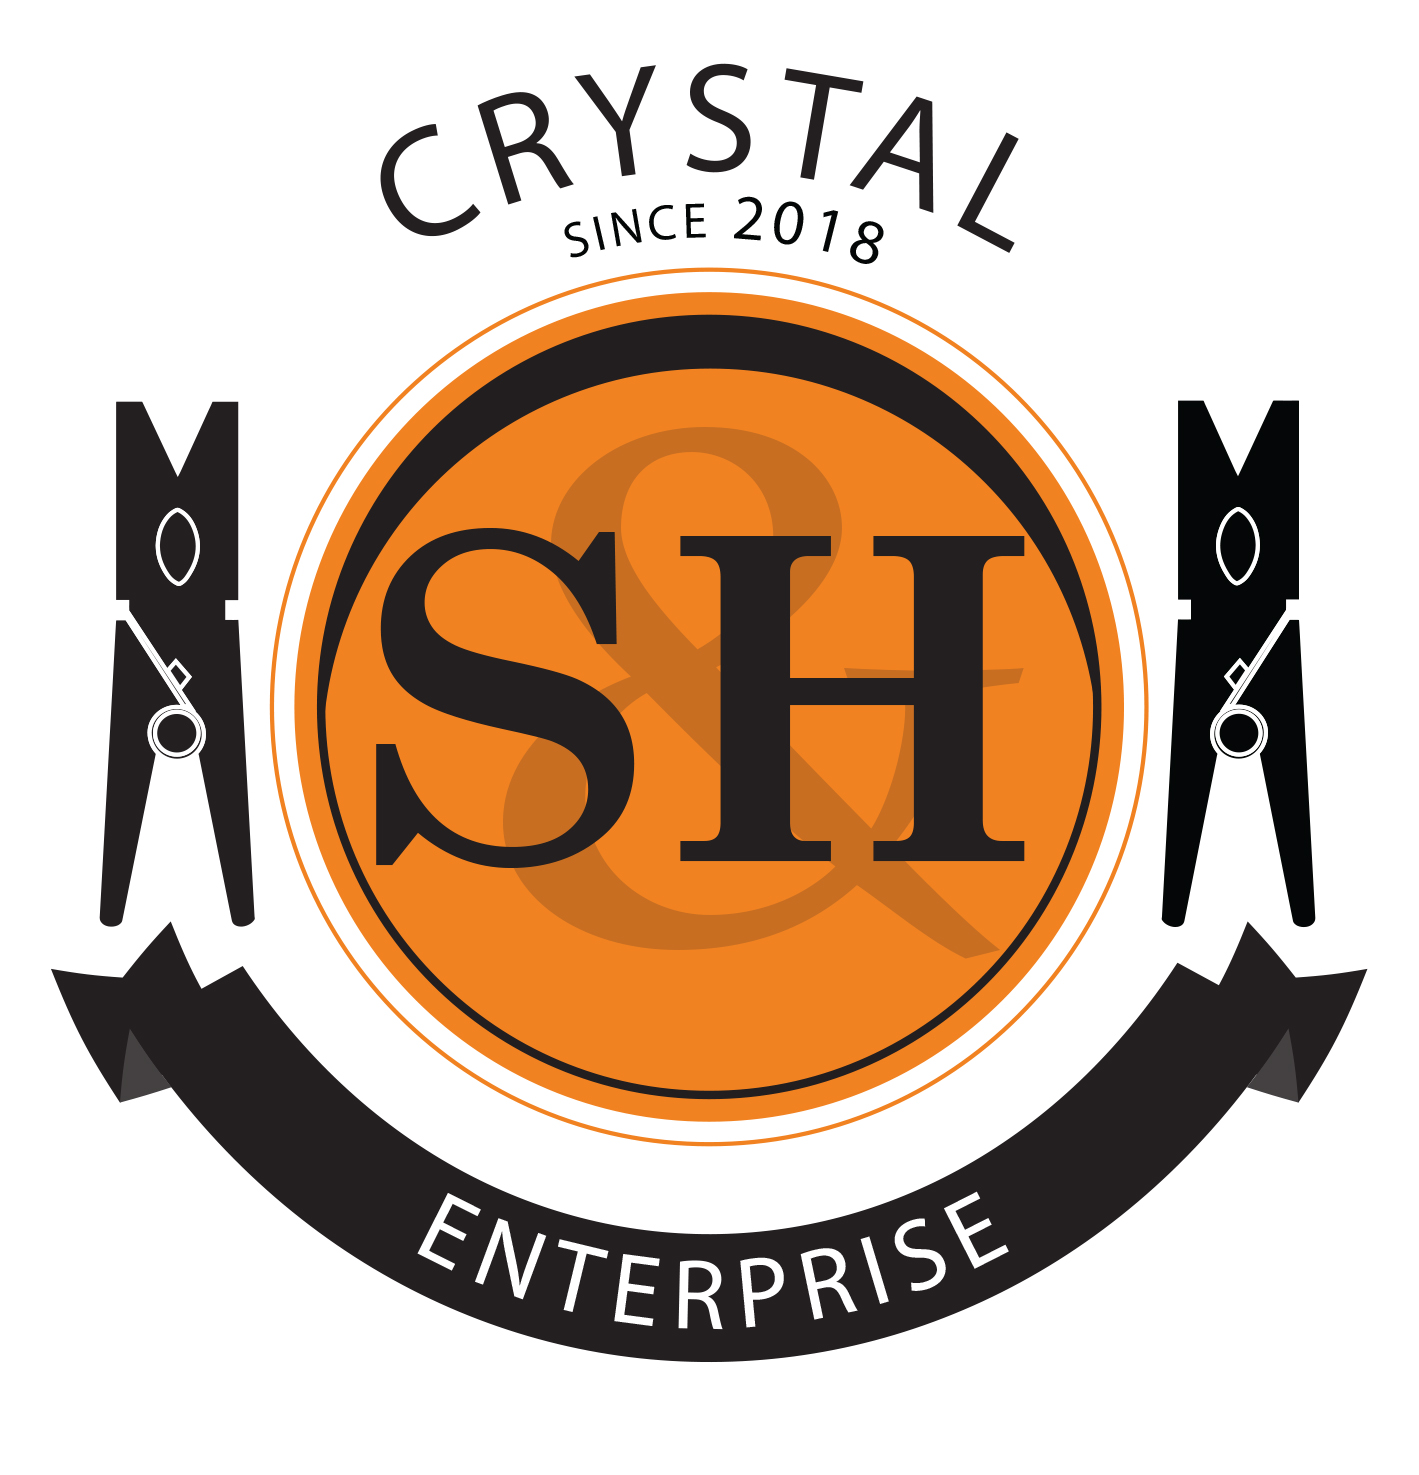 S&H Crystal Enterprise